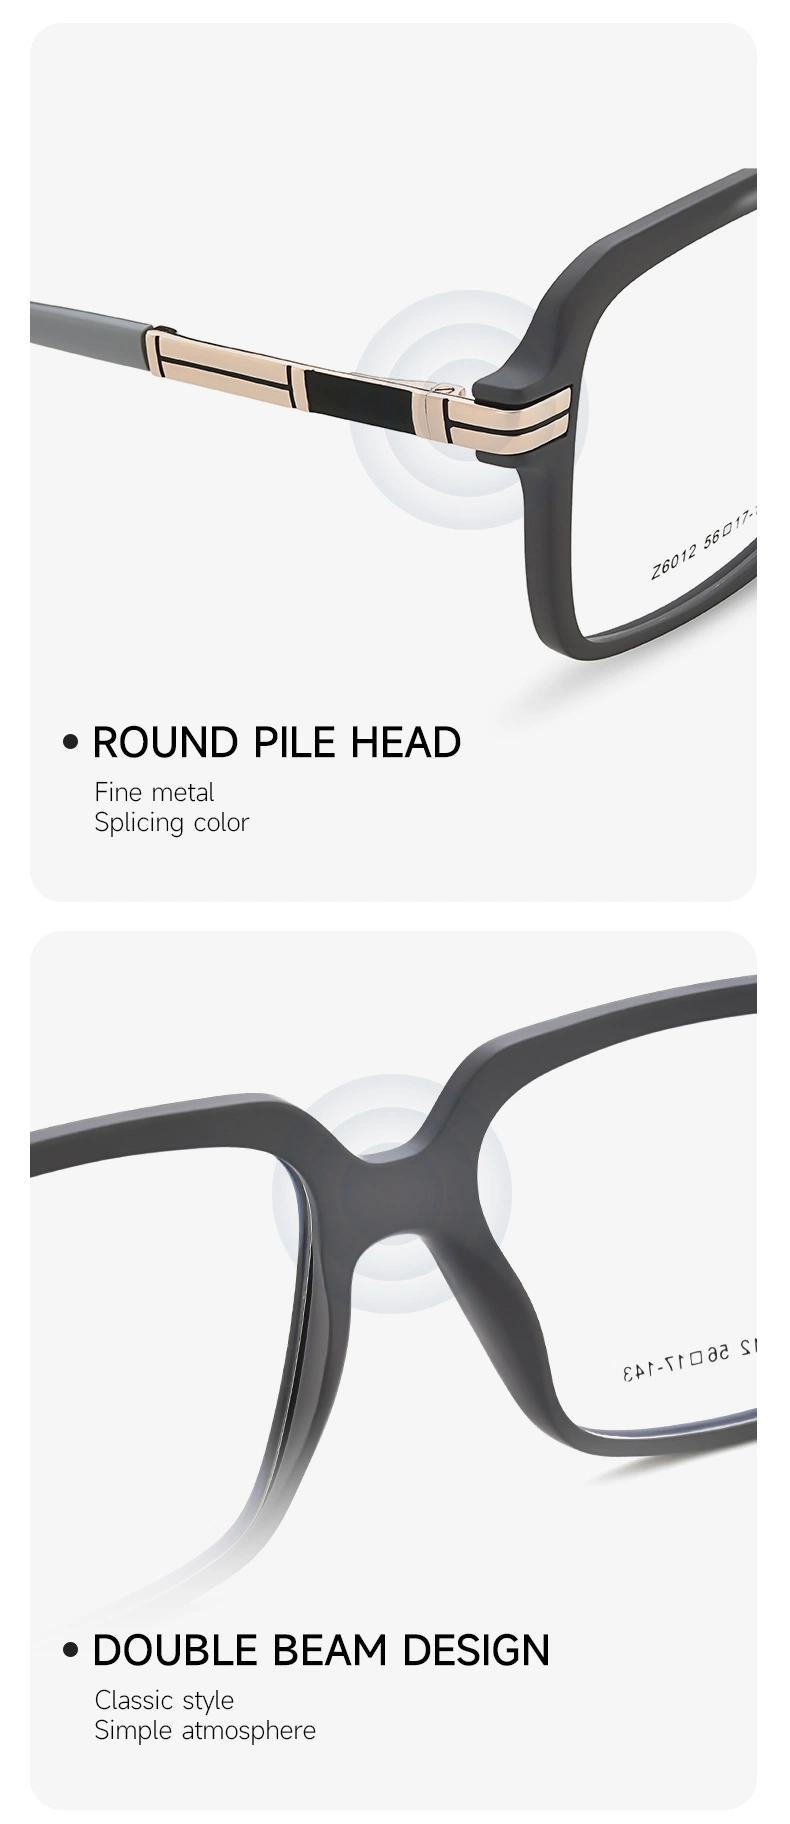 Wholesale Latest Spectacle Frames Optical Glasses Tr90 Plastic Eyeglass Frames